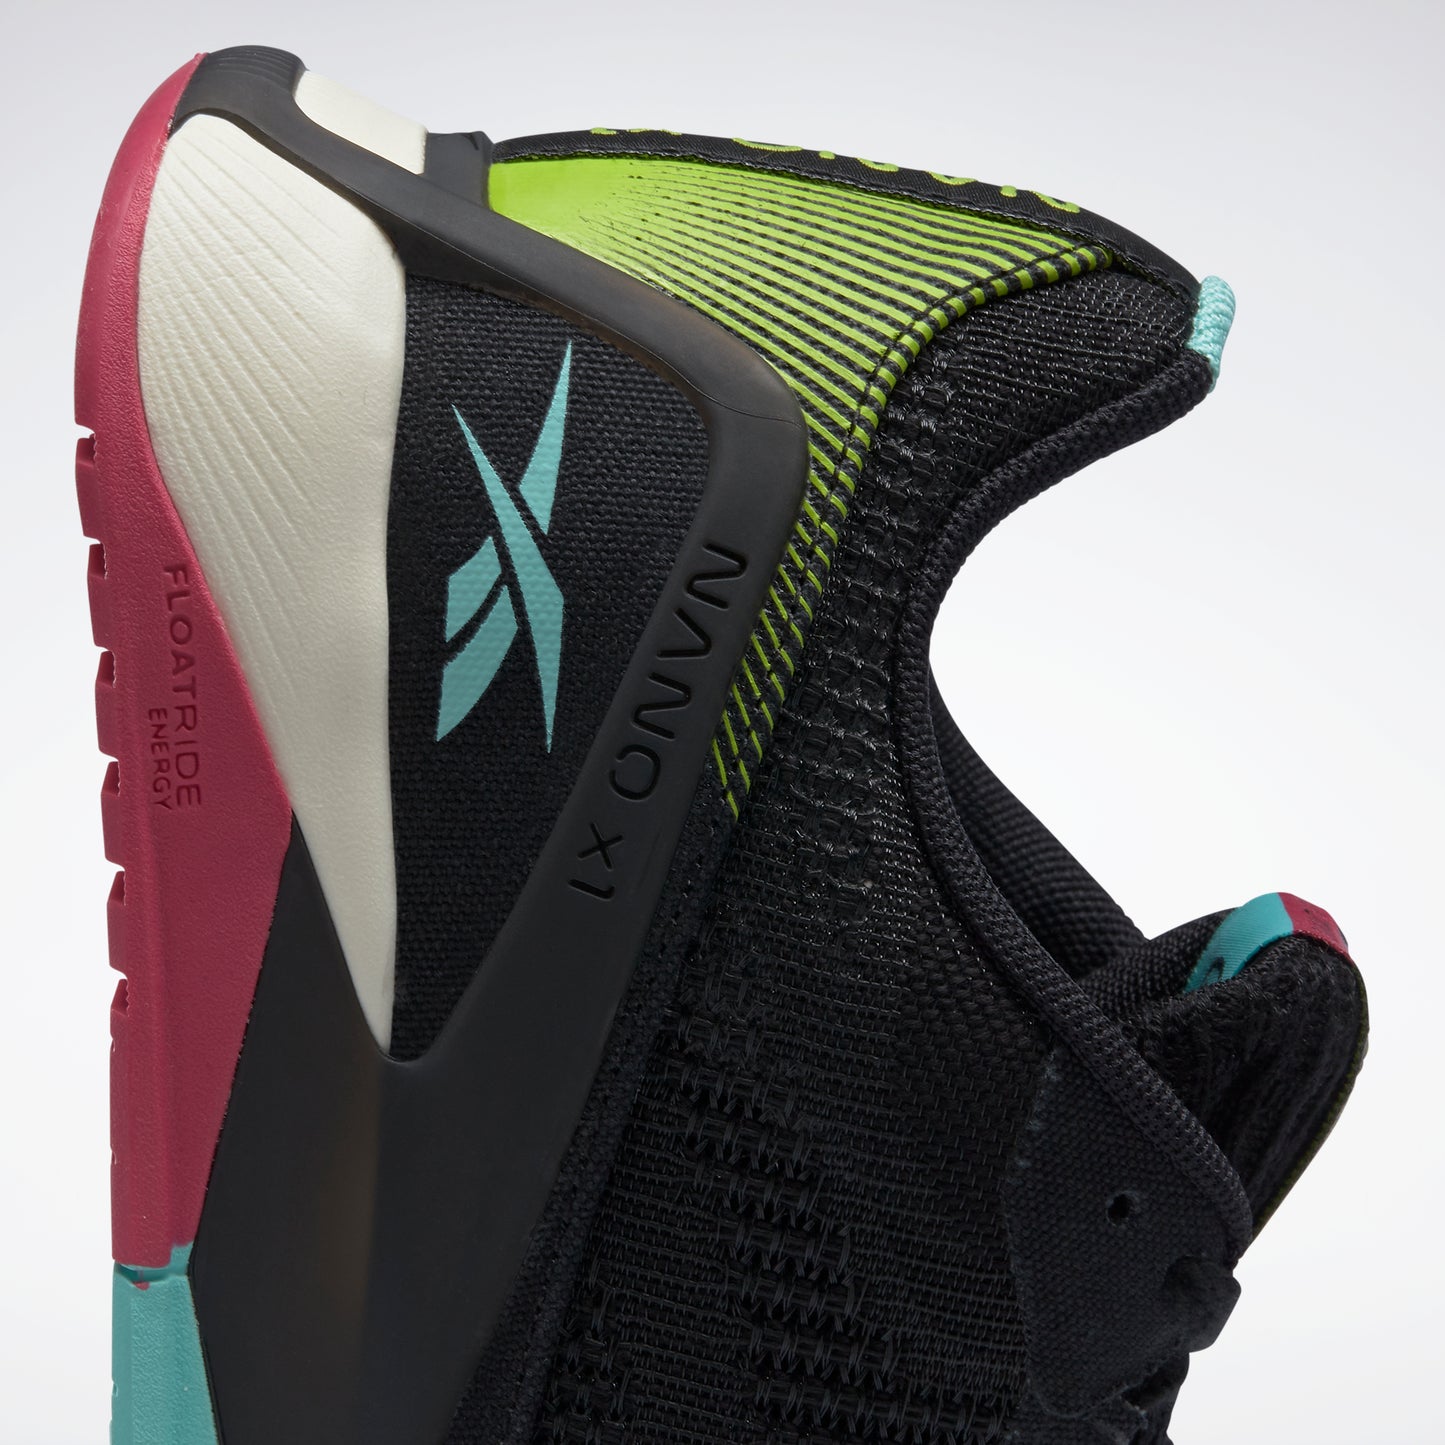 Reebok Footwear Women Nano X1 Vegan Shoes Cblack/Purpnk/Pixmin